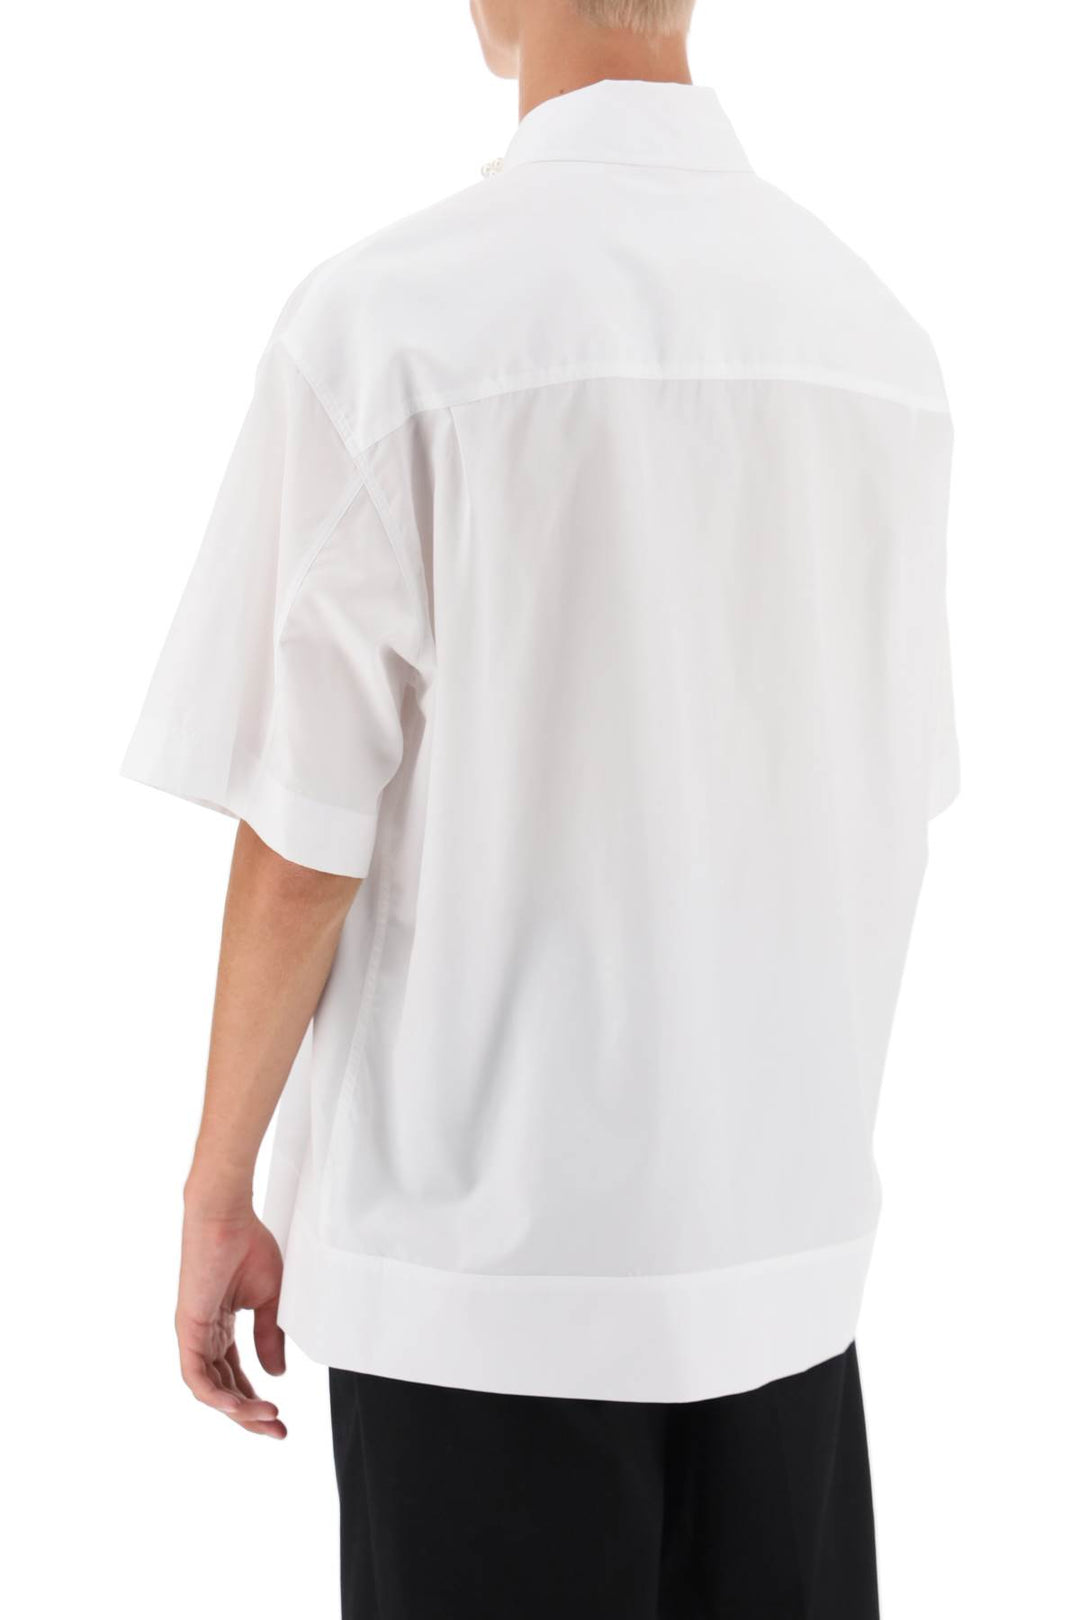 Simone Rocha Oversize Shirt With Pearls   Bianco